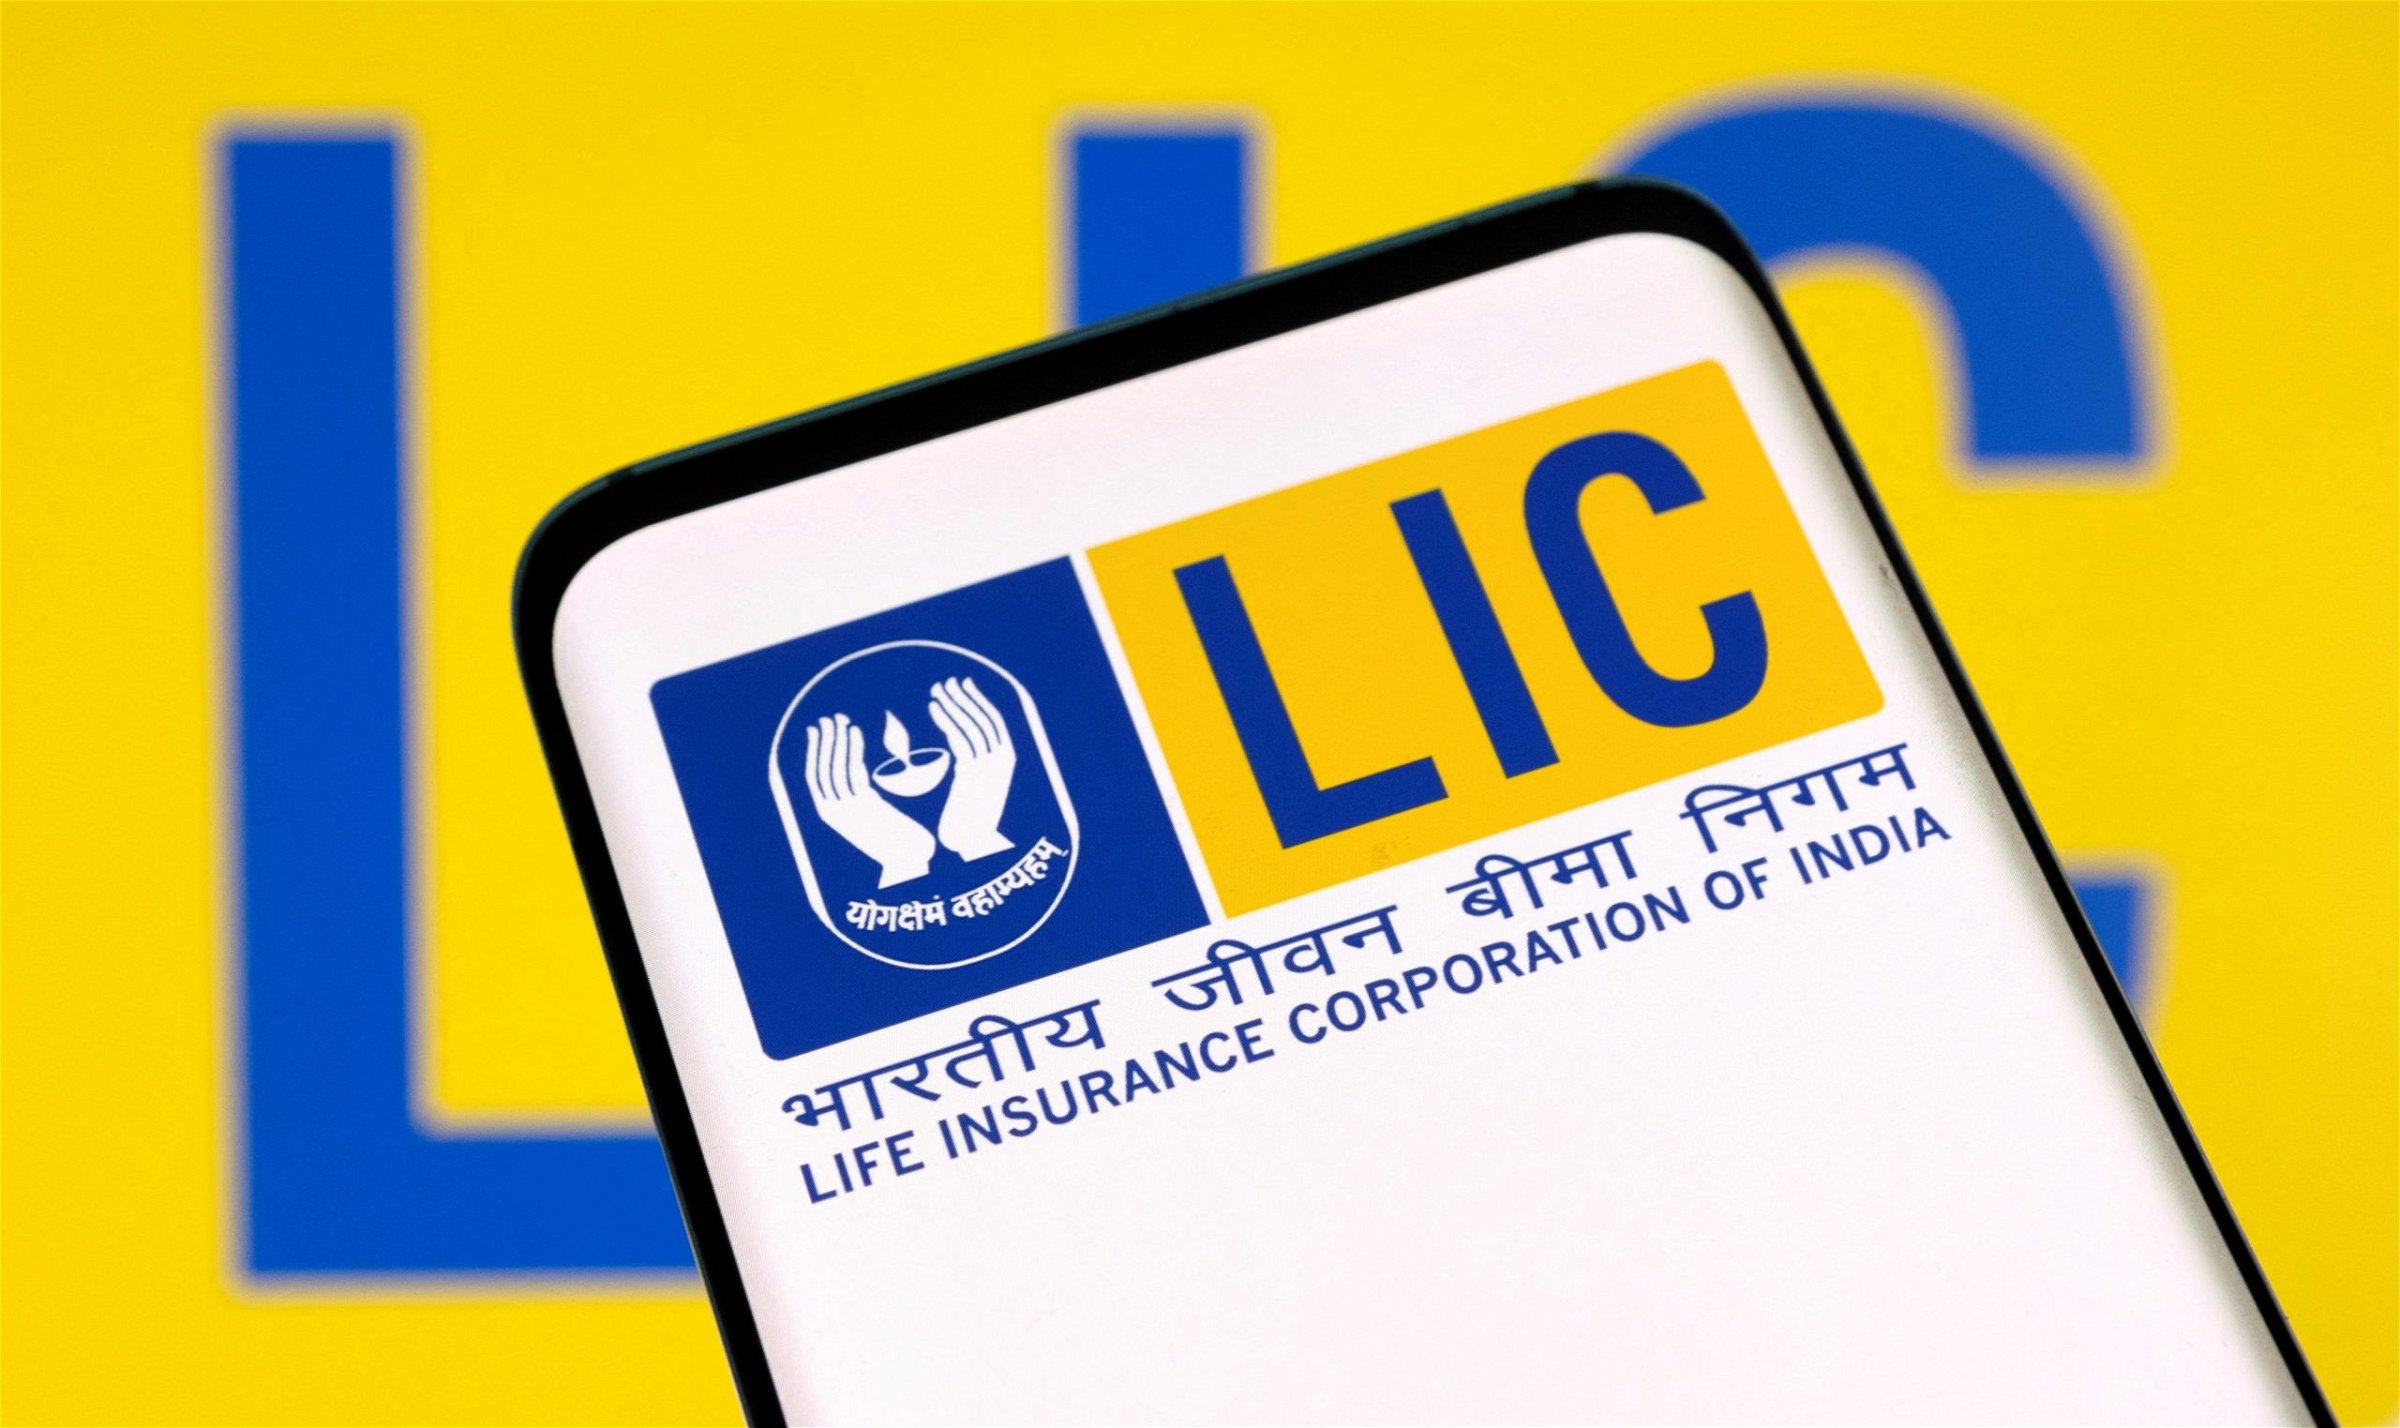 lic india share price news tamil